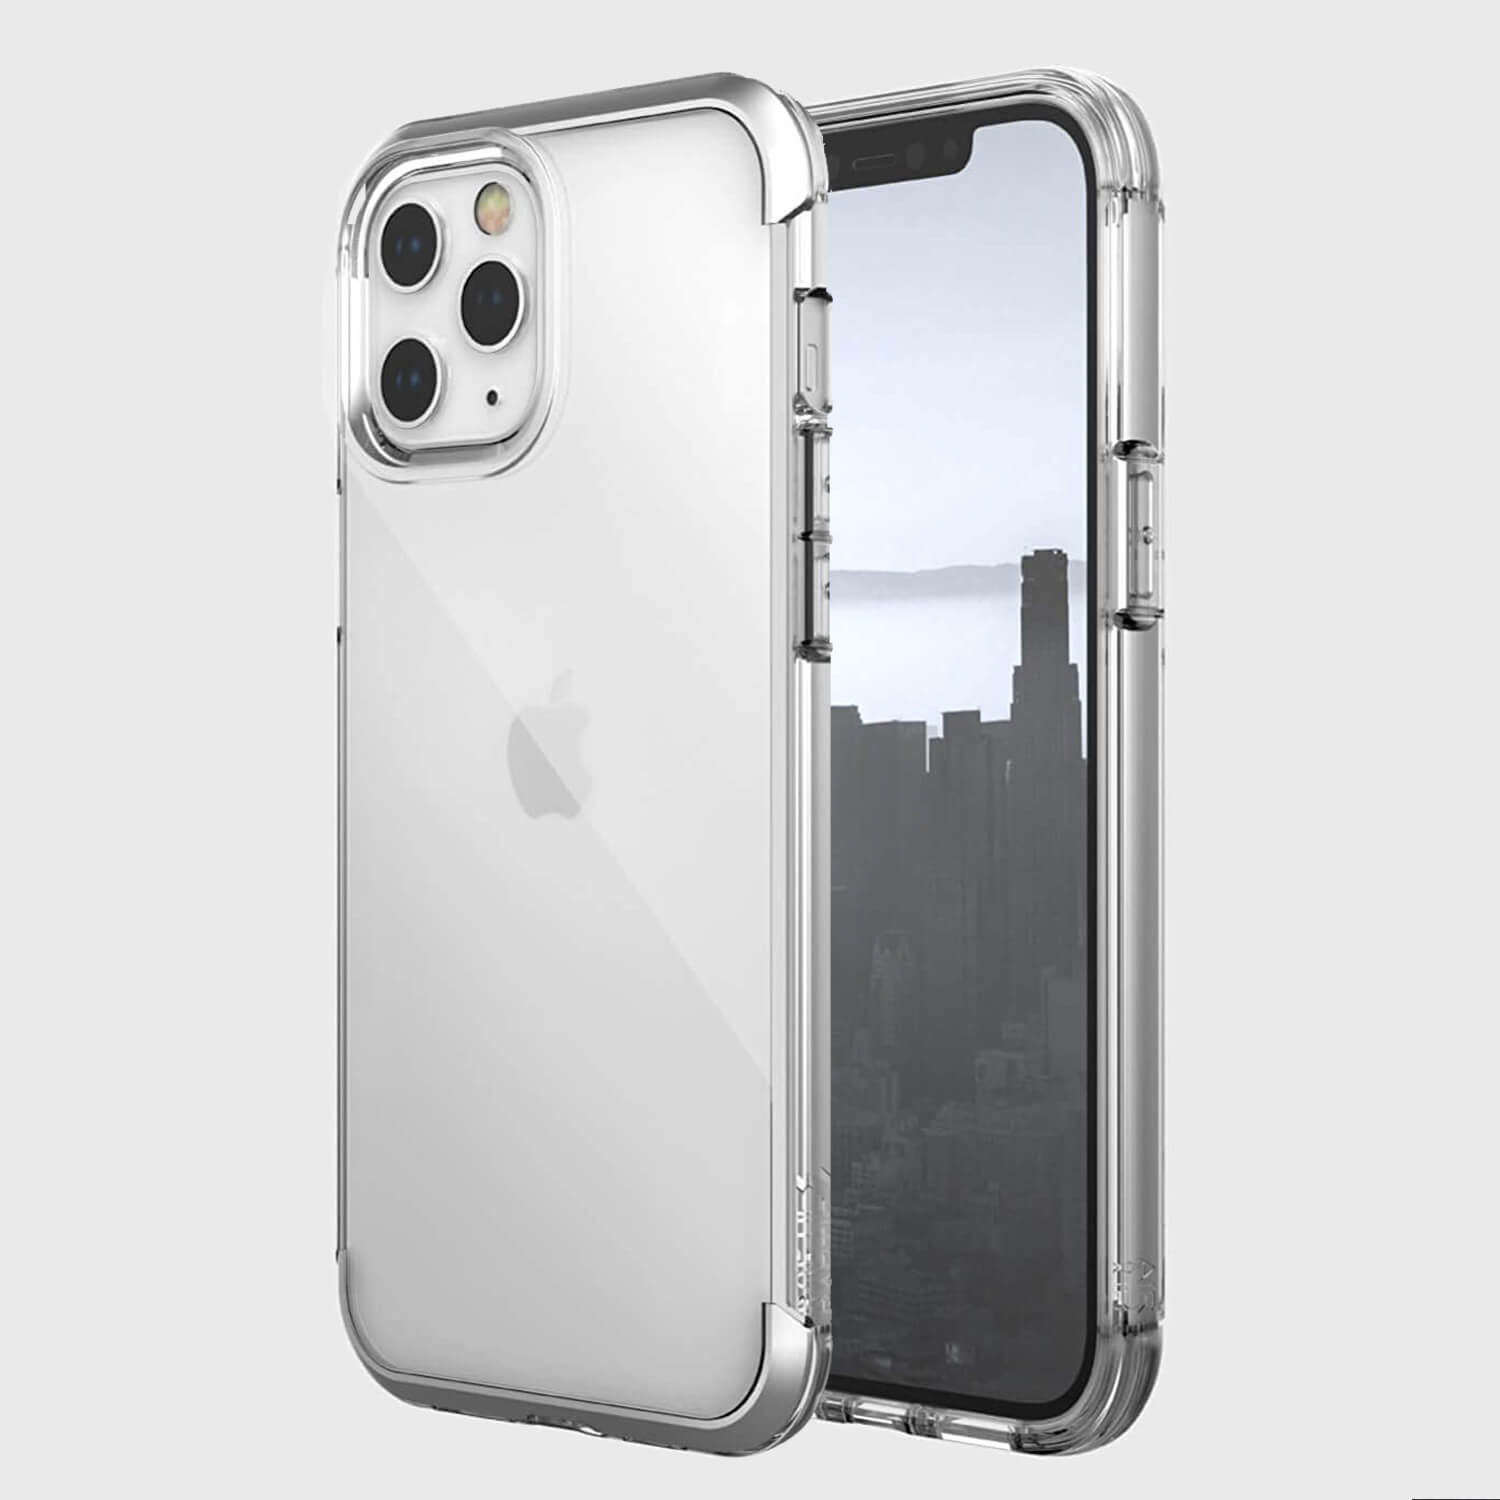 X-doria iPhone 12 Pro Max Case Raptic Air Clear